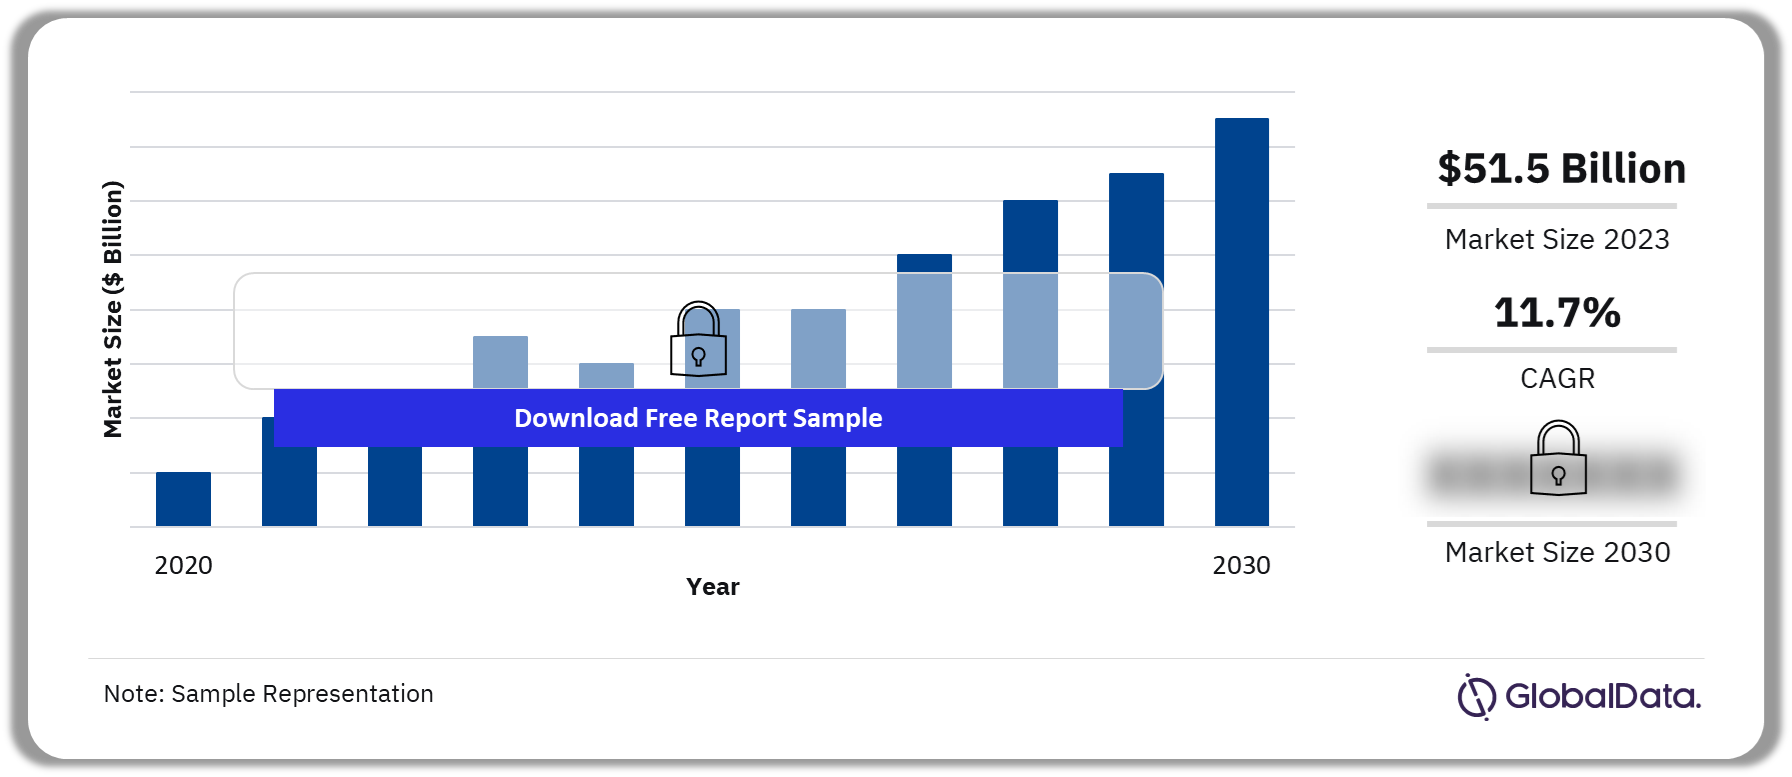 Vacation Rental Market Overview, 2020-2030 ($ Billion)